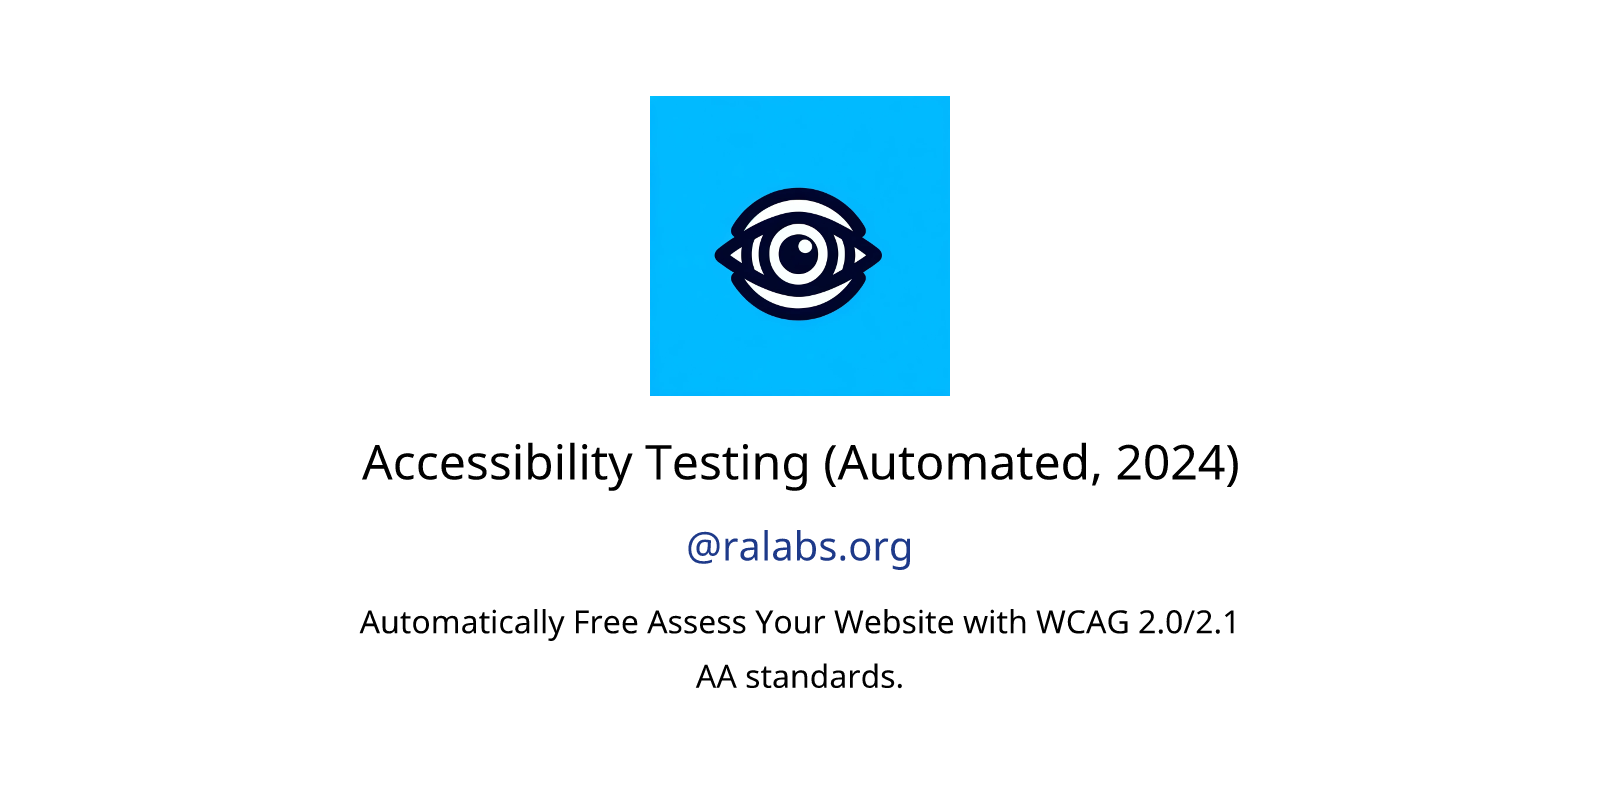 Accessibility Testing (Automated, 2024) GPTs author, description